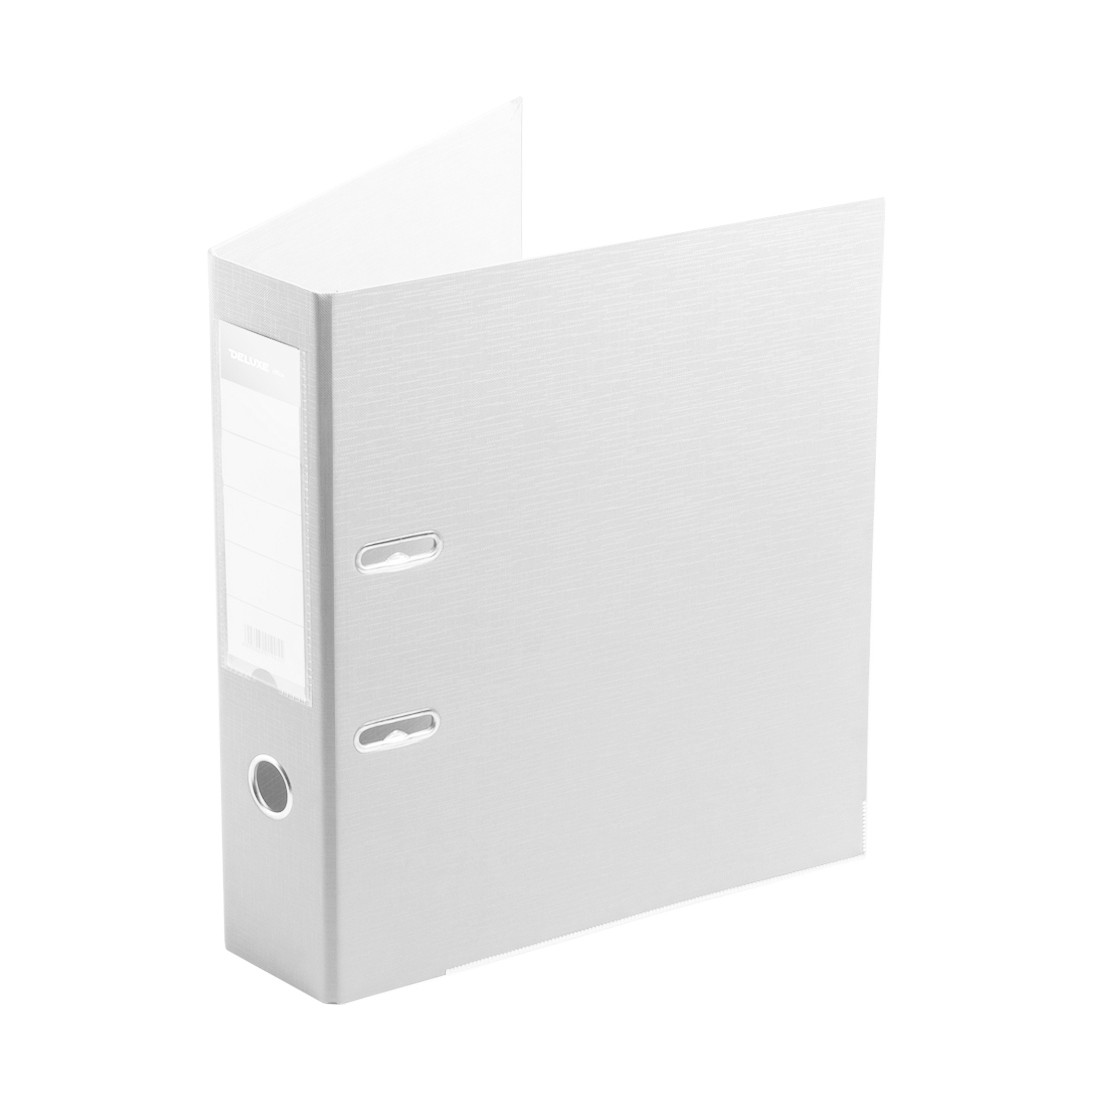 Папка-регистратор Deluxe с арочным механизмом, Office 3-WT17 (3" WHITE), А4, 70 мм, белый, фото 1